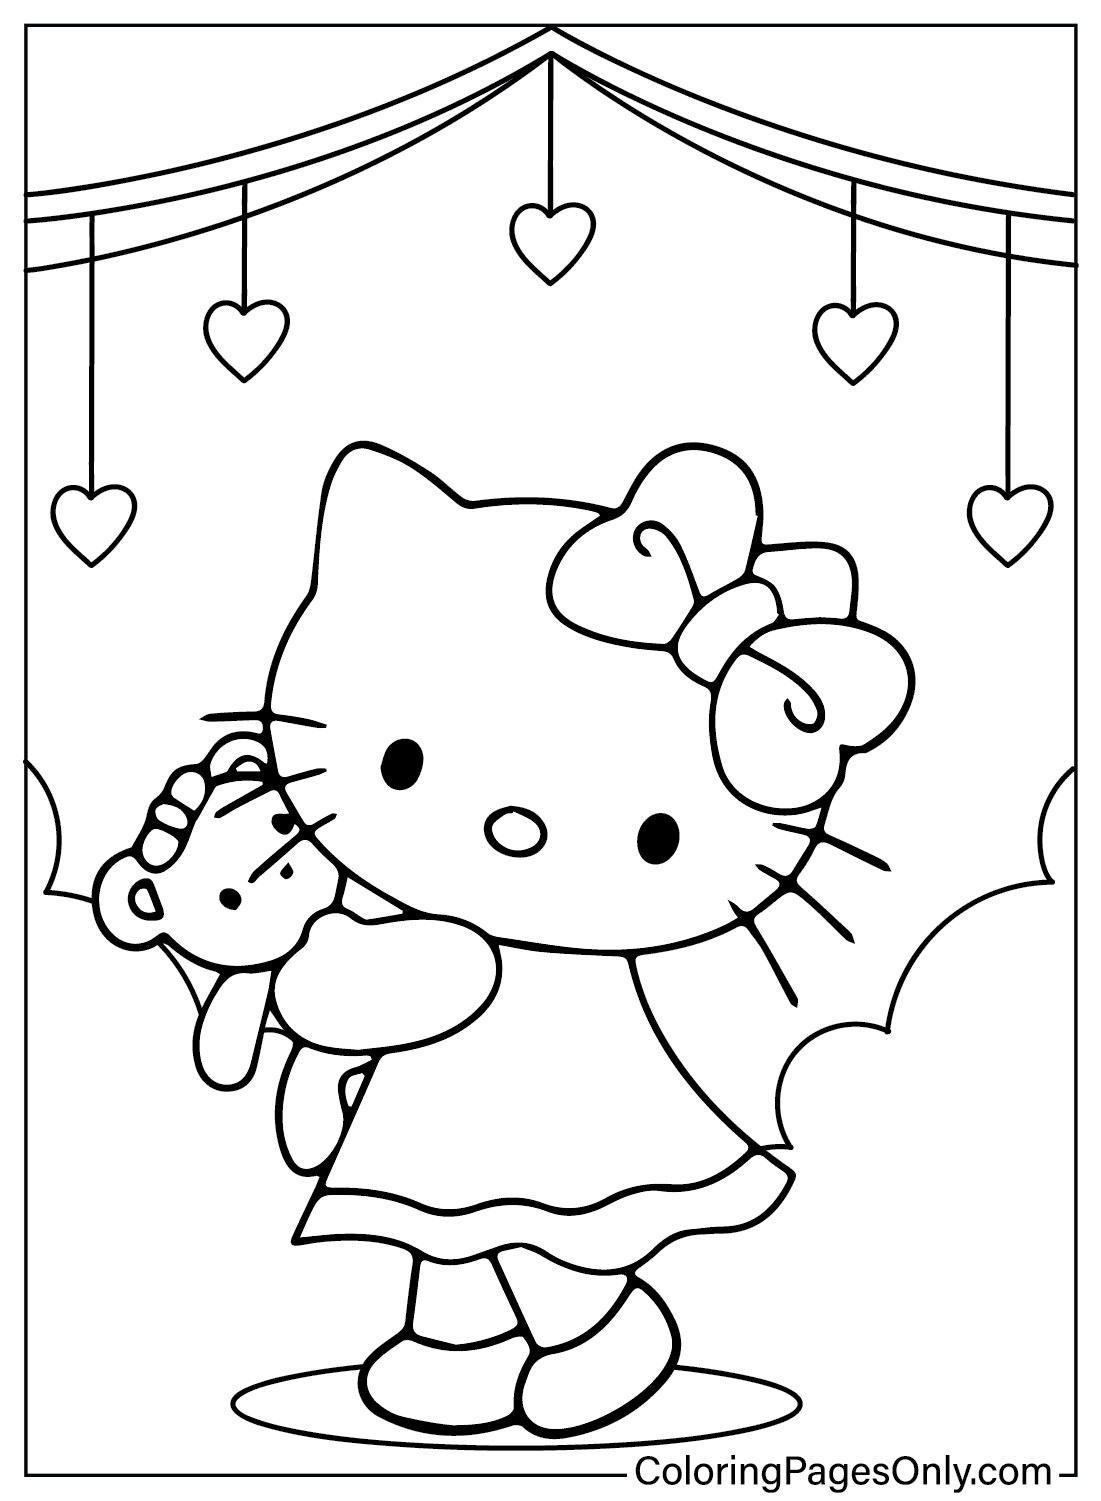 Página para colorir linda da Hello Kitty